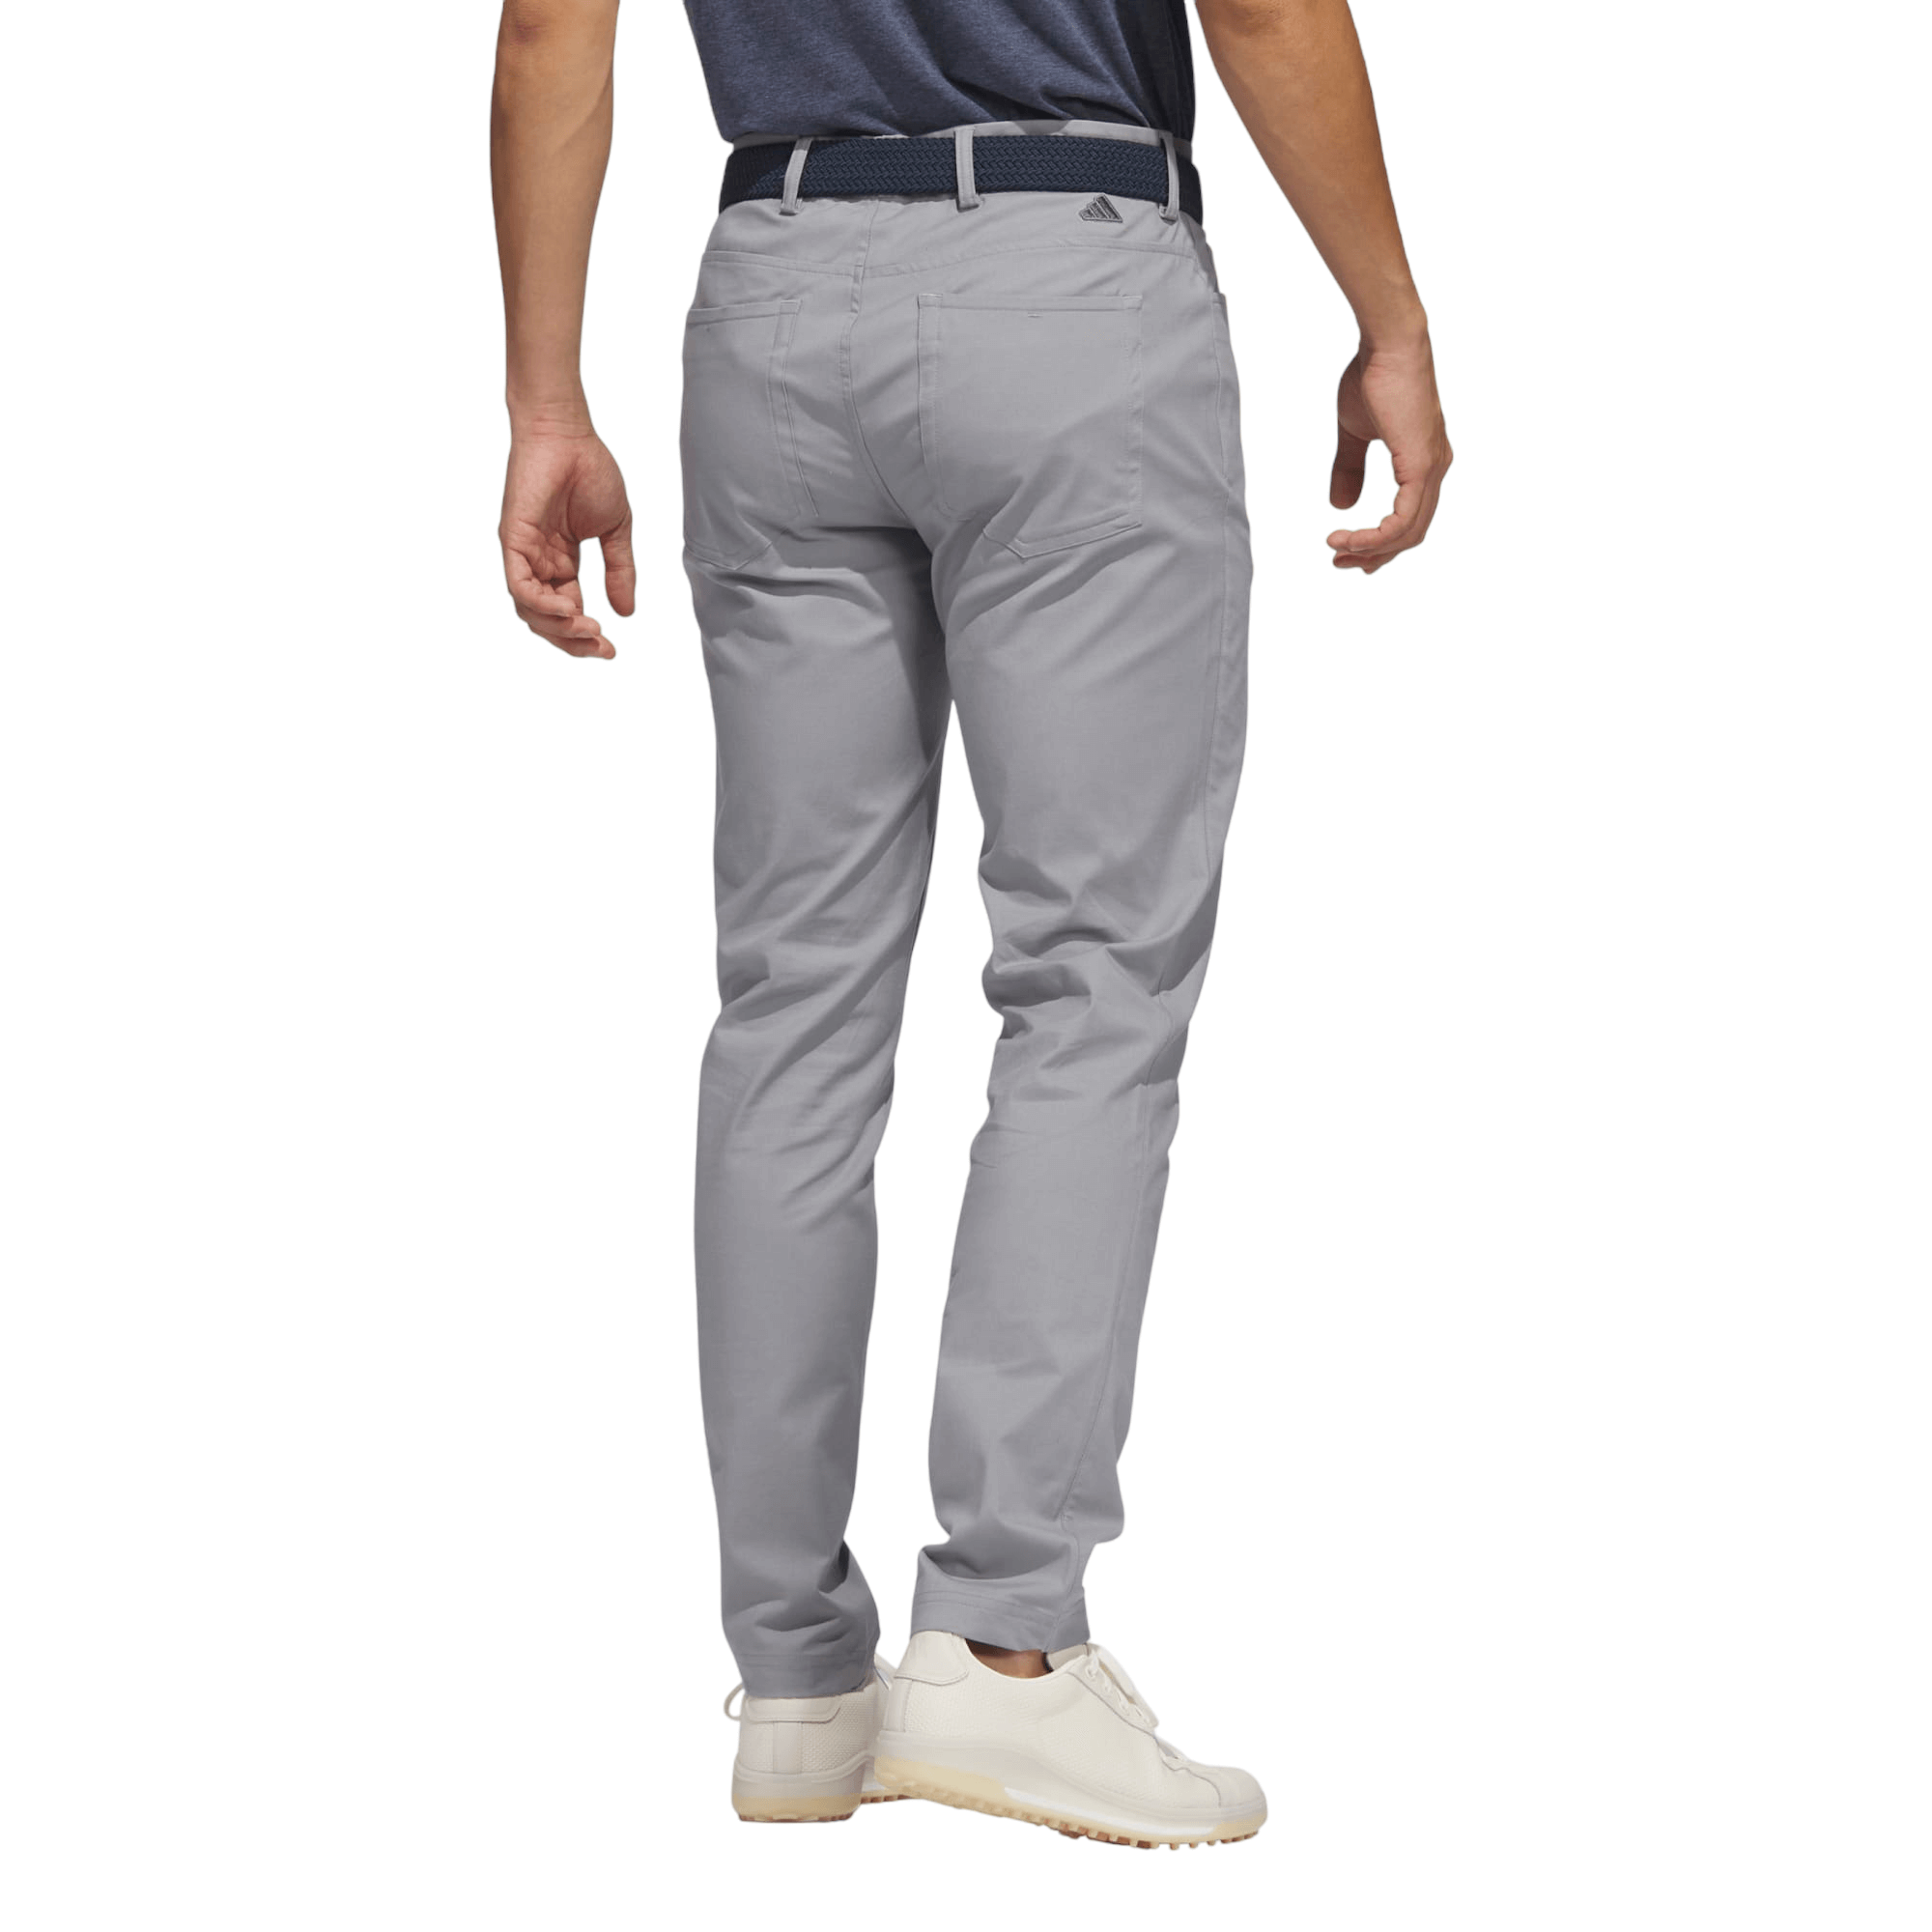 ADIDAS Men's Adicross Chino Golf Pants NWT White SIZE: 36 X 30 | eBay